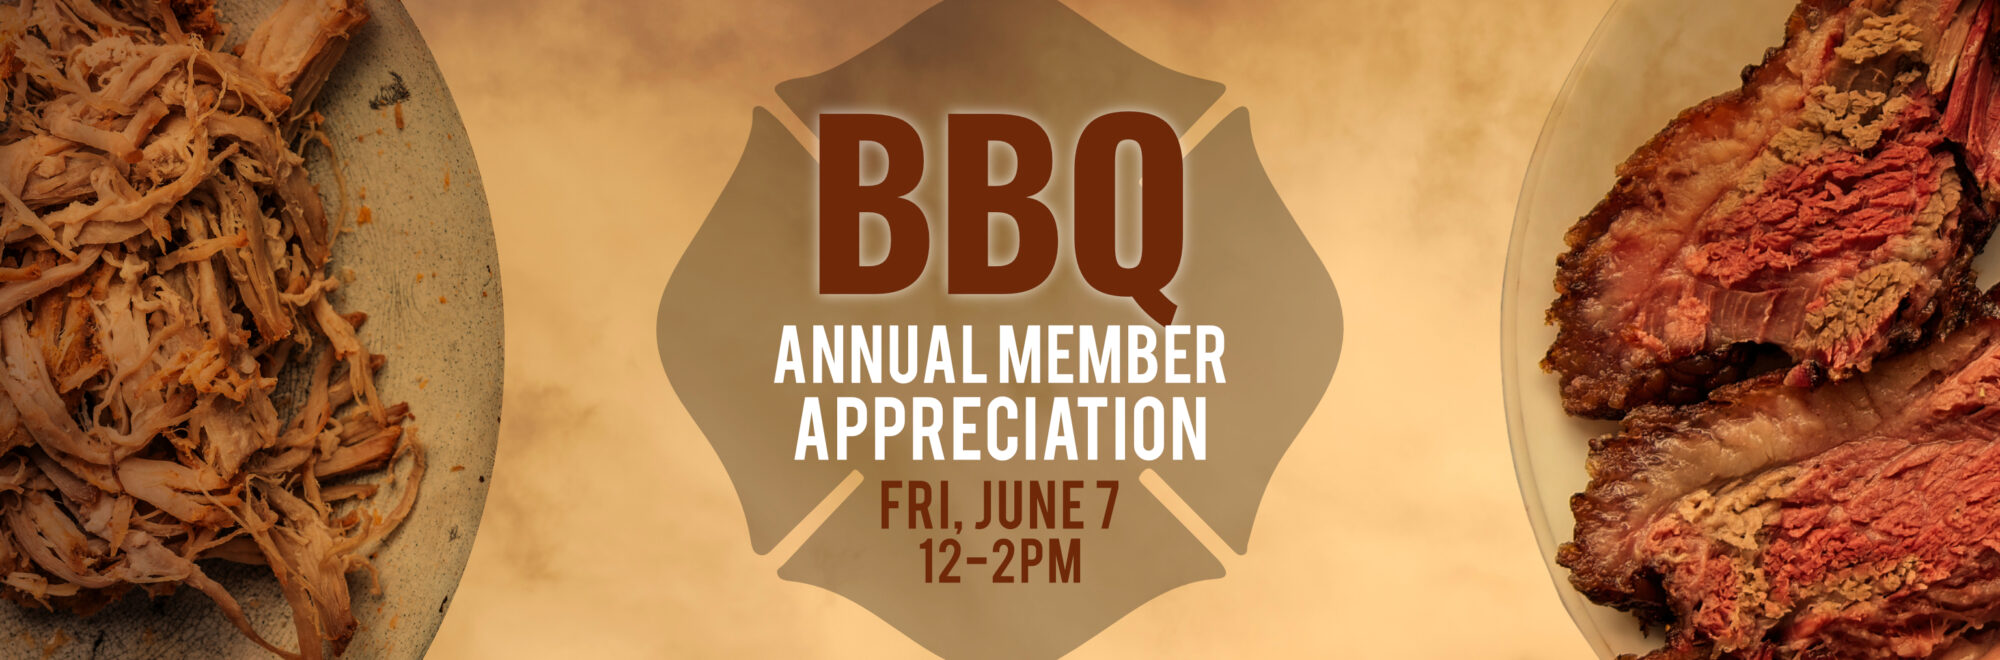 Member Appreciation BBQ June 7th @ credit union